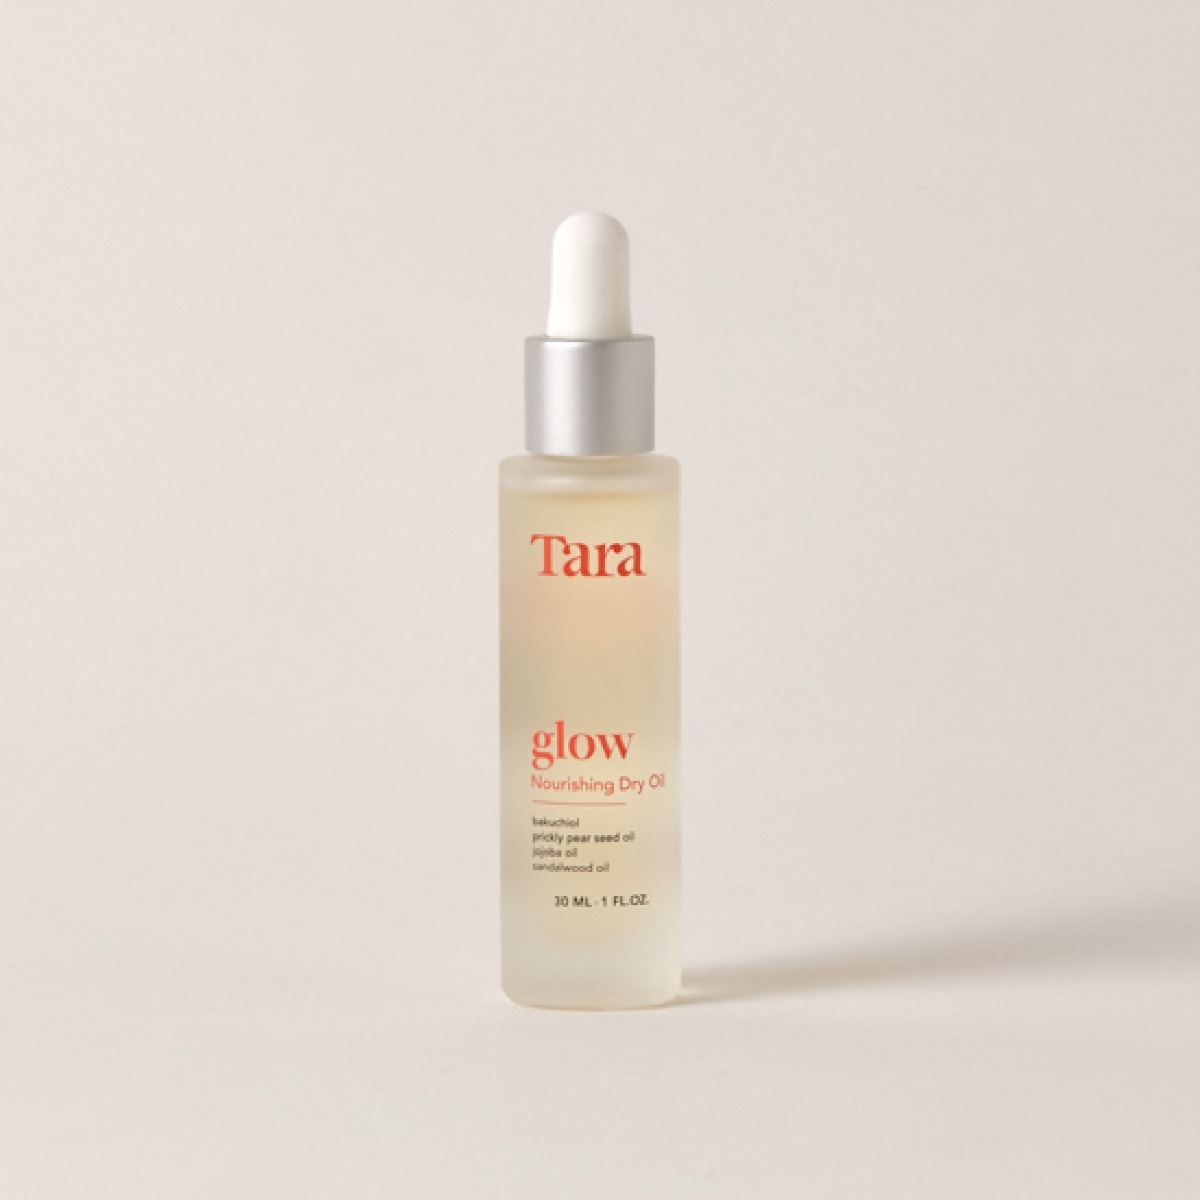 Glow Nourishing Dry Oil - Tara Nature's Formula